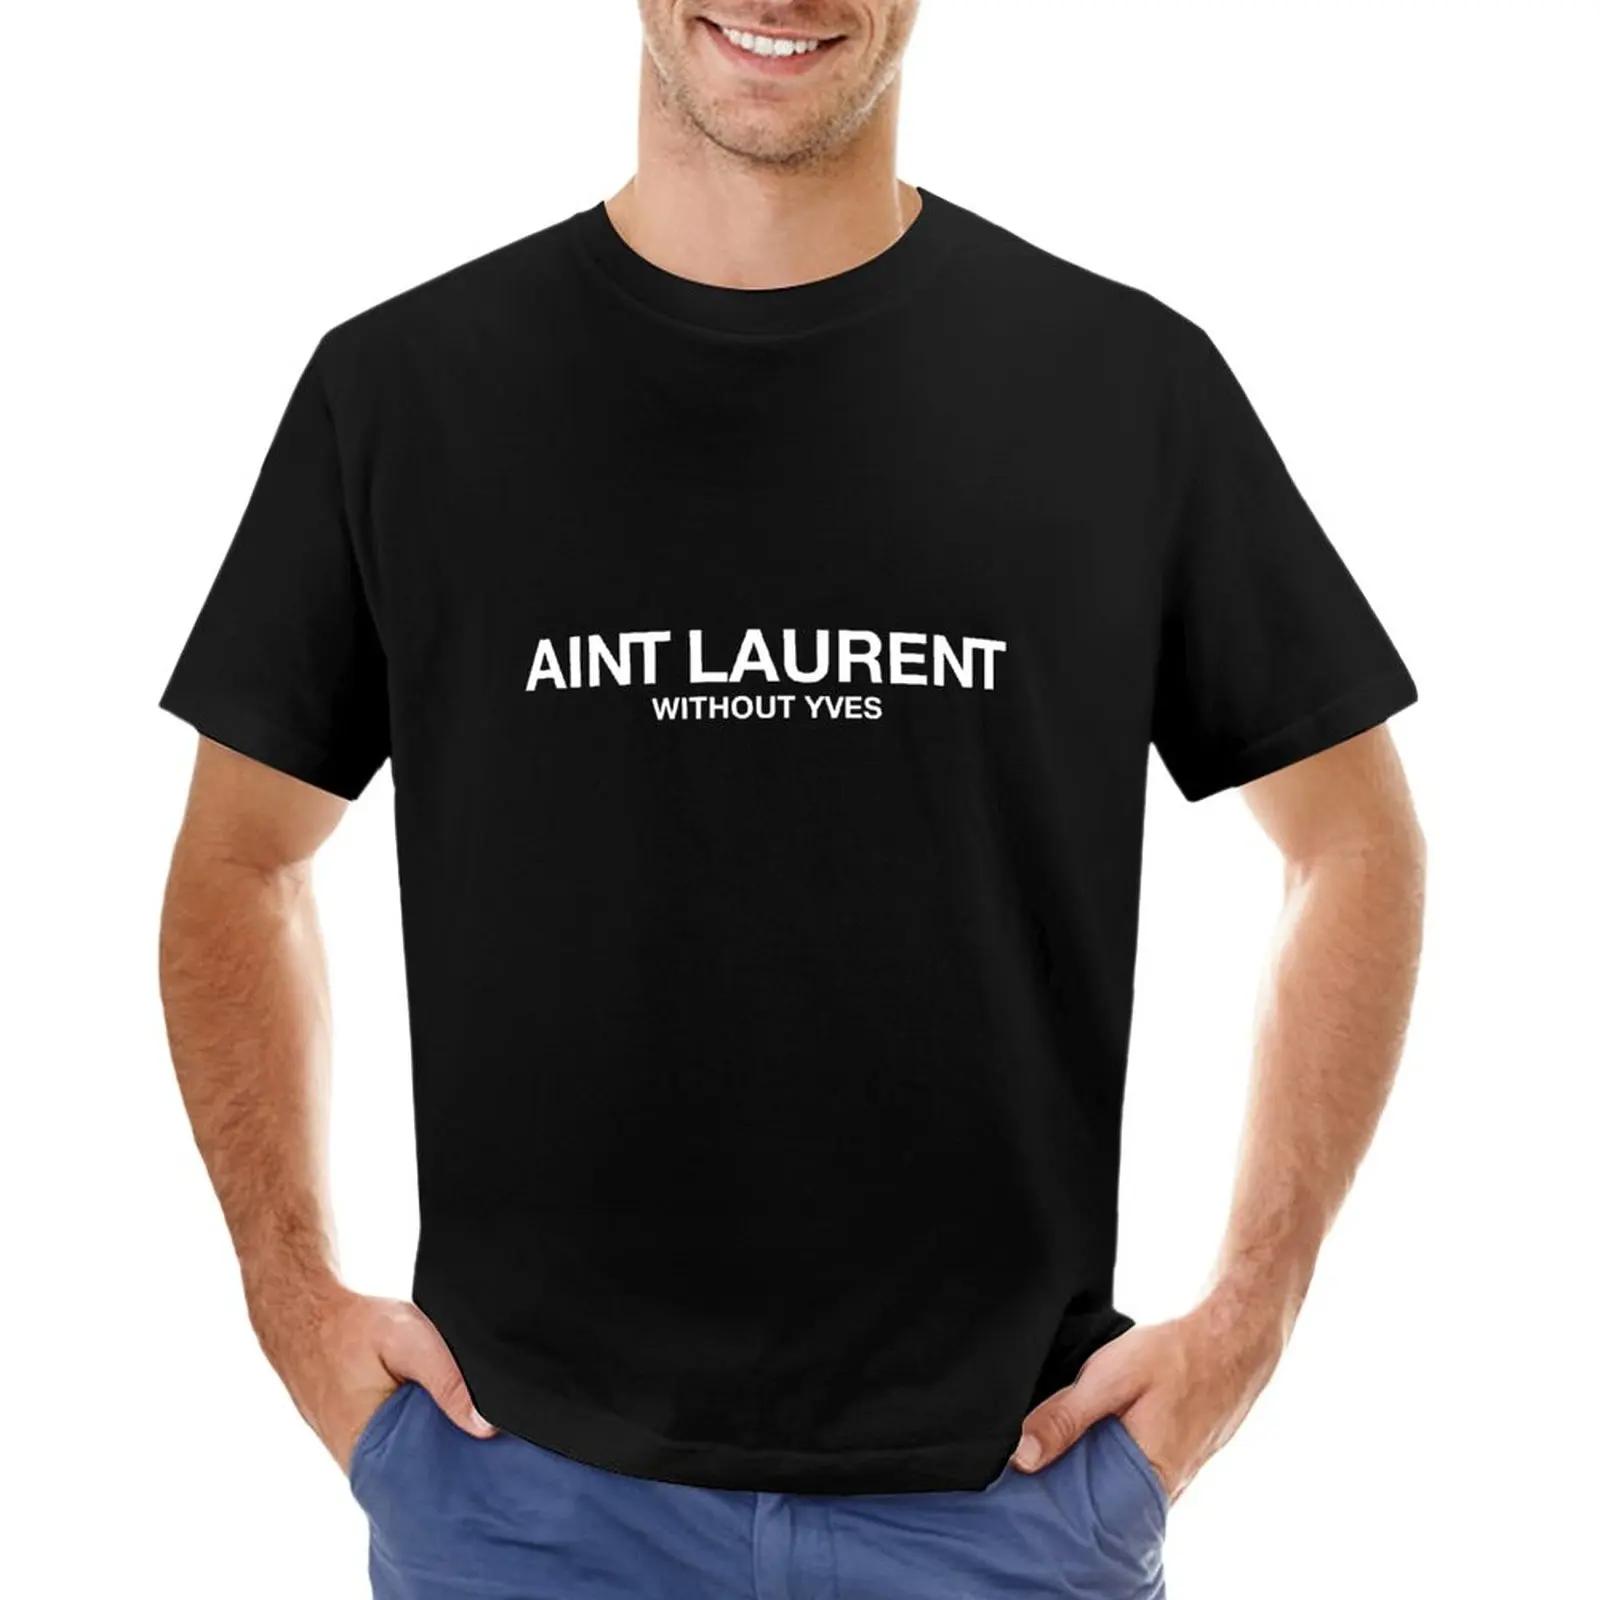 AINT LAURENT WITHOUT YVES Fashion Designer Parody T-Shirt plain t-shirt Short sleeve tee tshirts for men